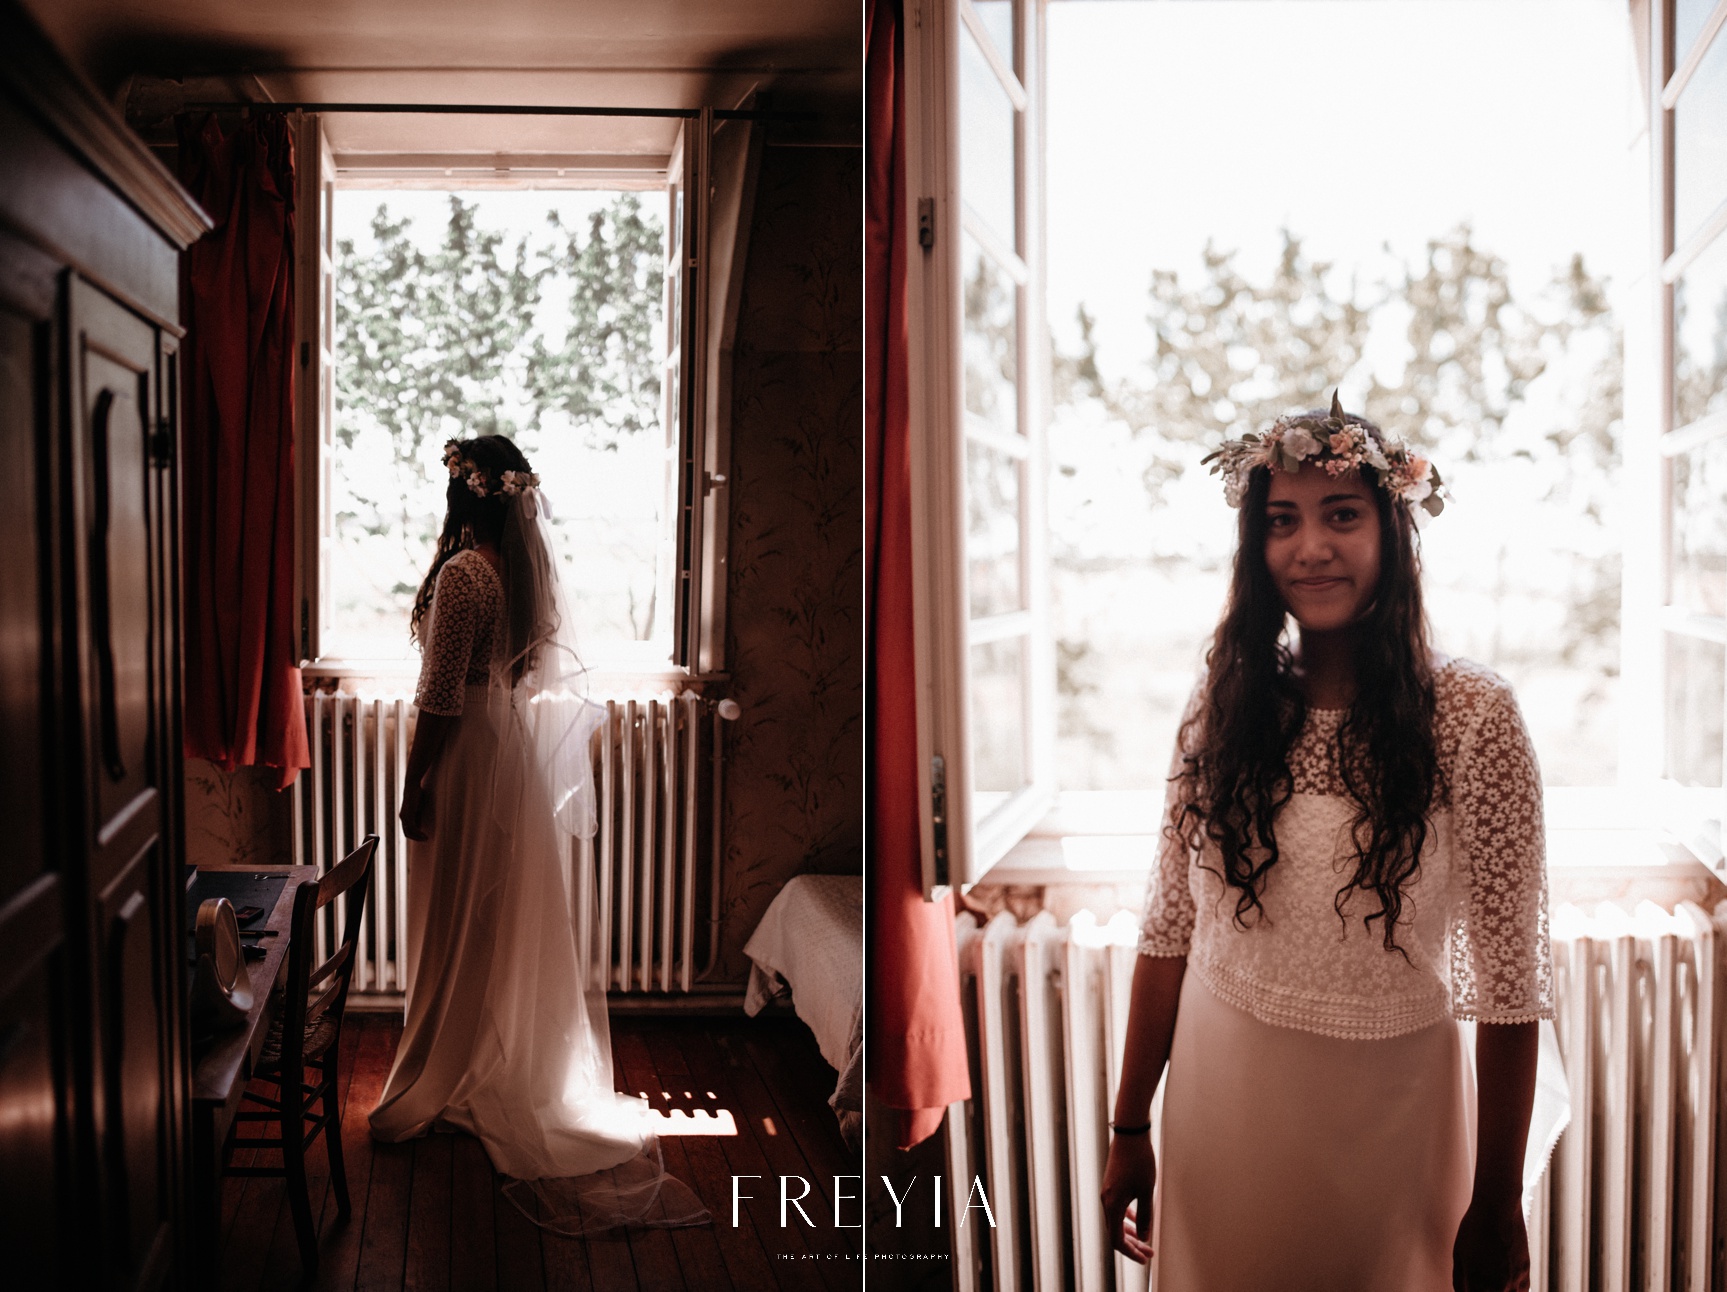 R + T |  mariage reportage alternatif moody intime minimaliste vintage naturel boho boheme |  PHOTOGRAPHE mariage PARIS france destination  | FREYIA photography_-122.jpg (Copy)